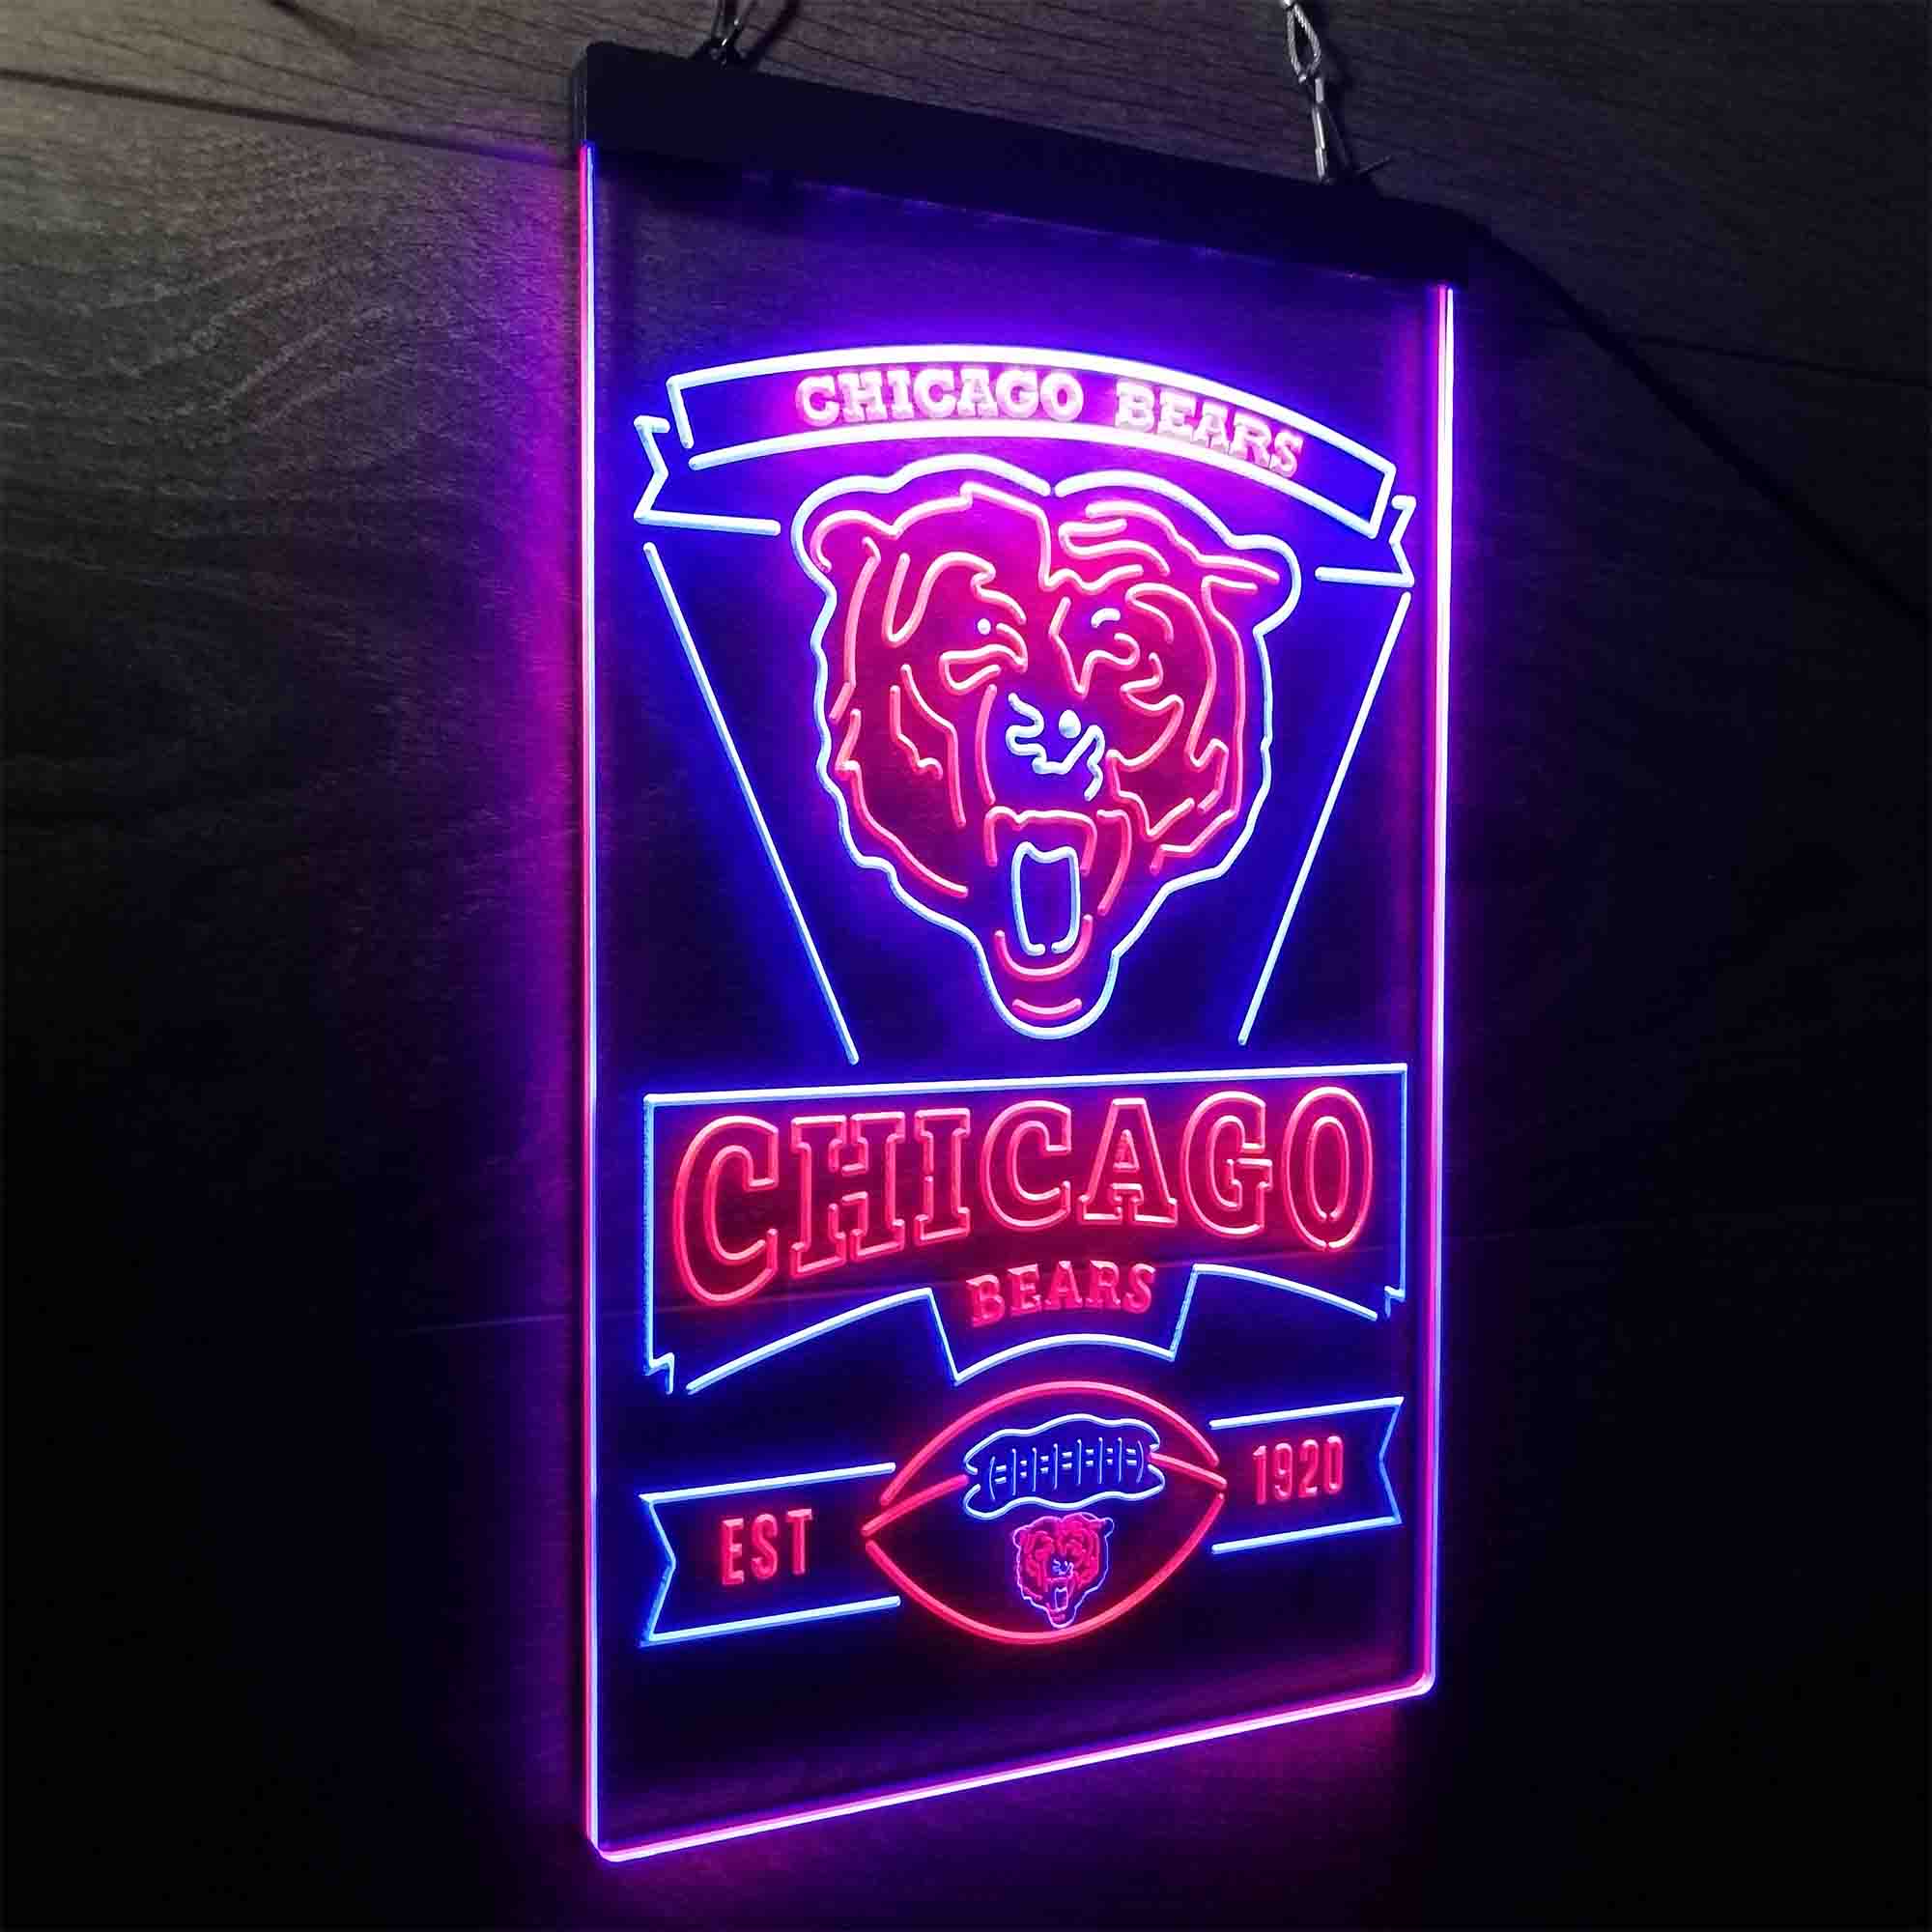 Chicago Bears Est. 1920 LED Neon Sign